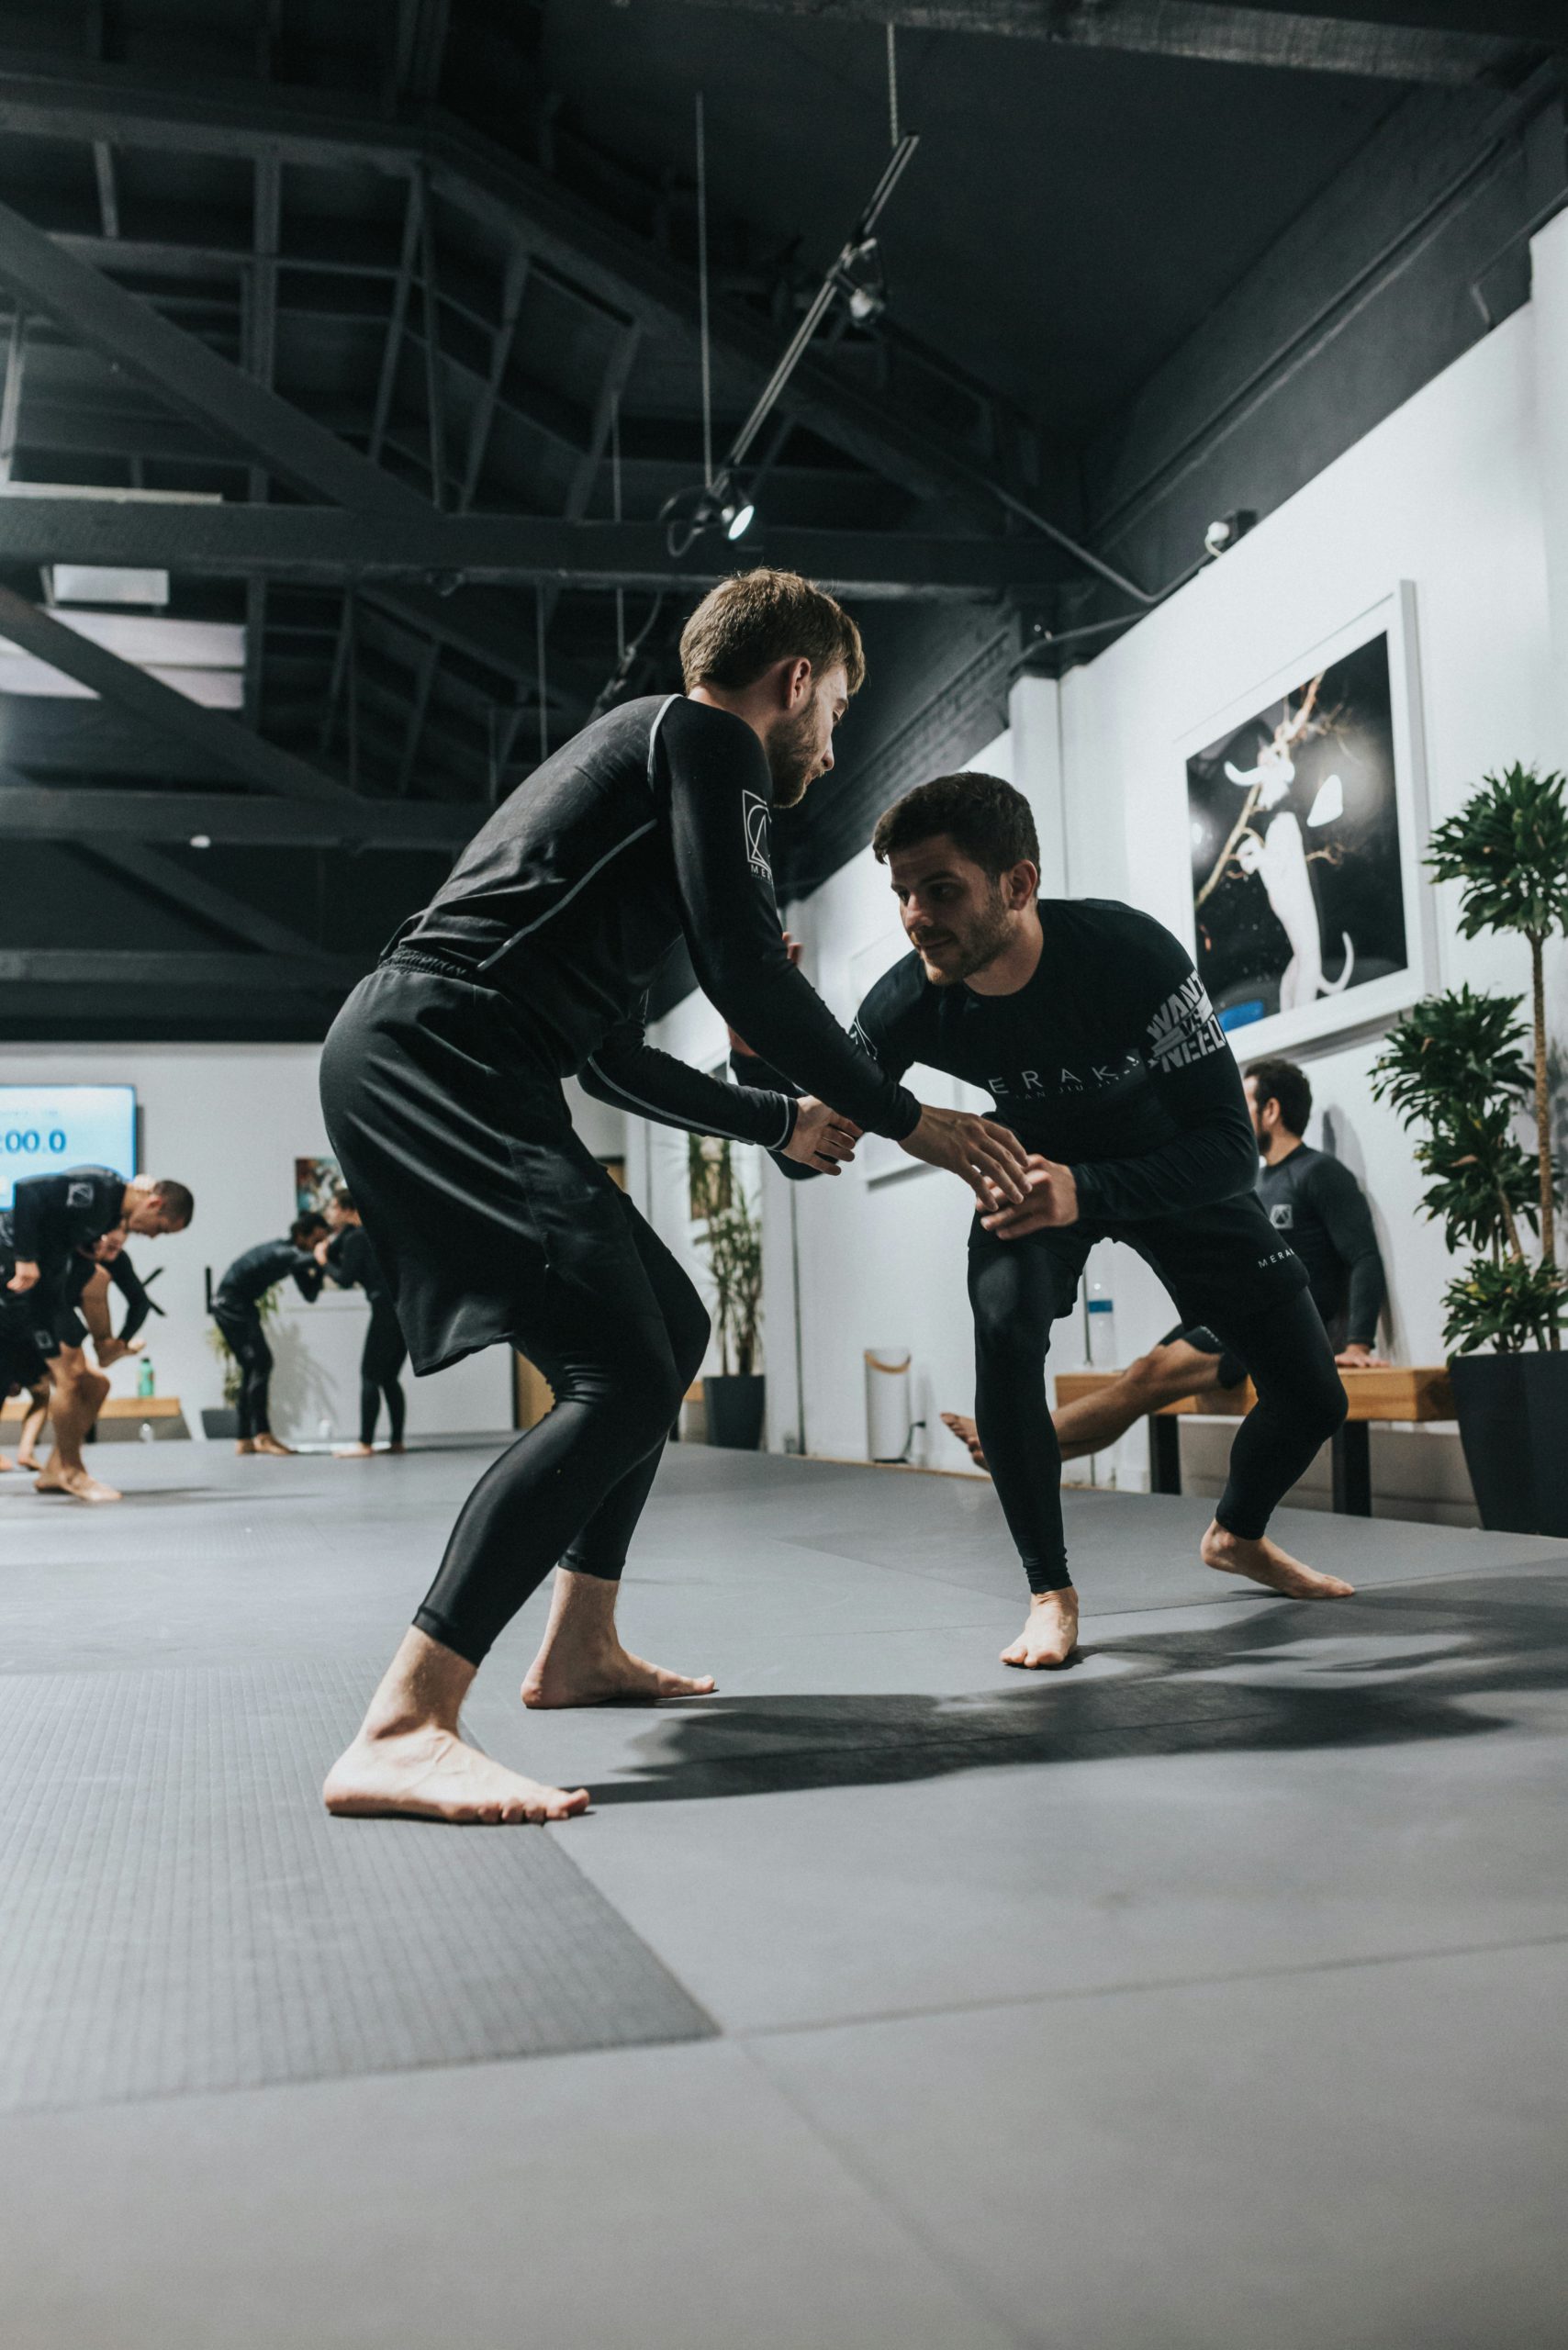 Two men practicing martial arts.